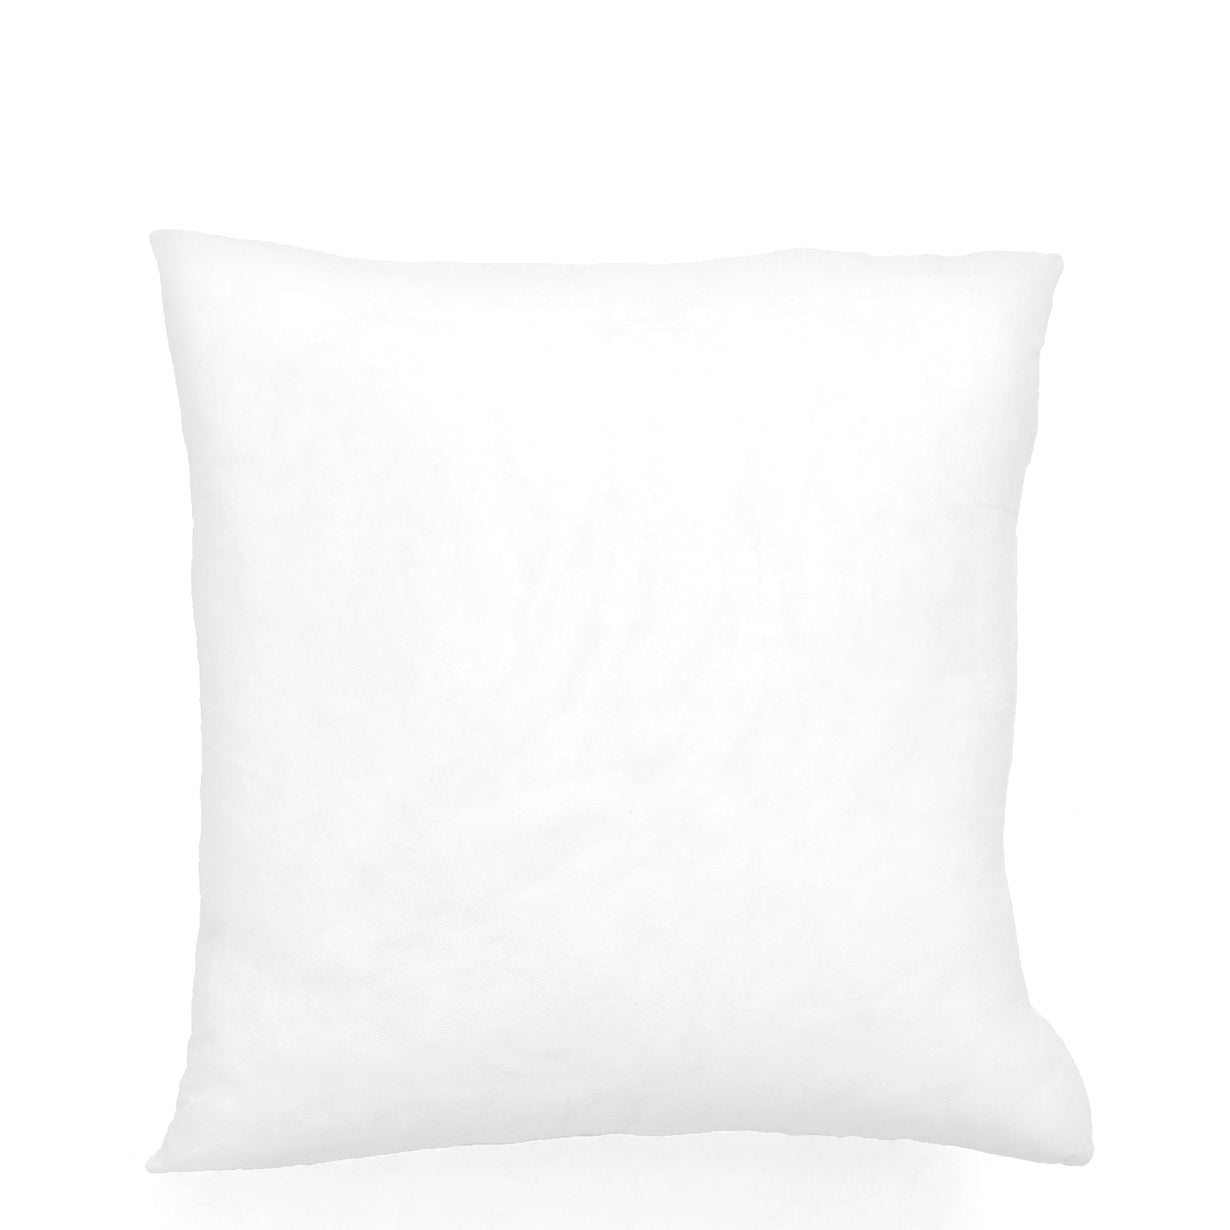 Vera Bradley Decorative Throw Pillow Insert in White